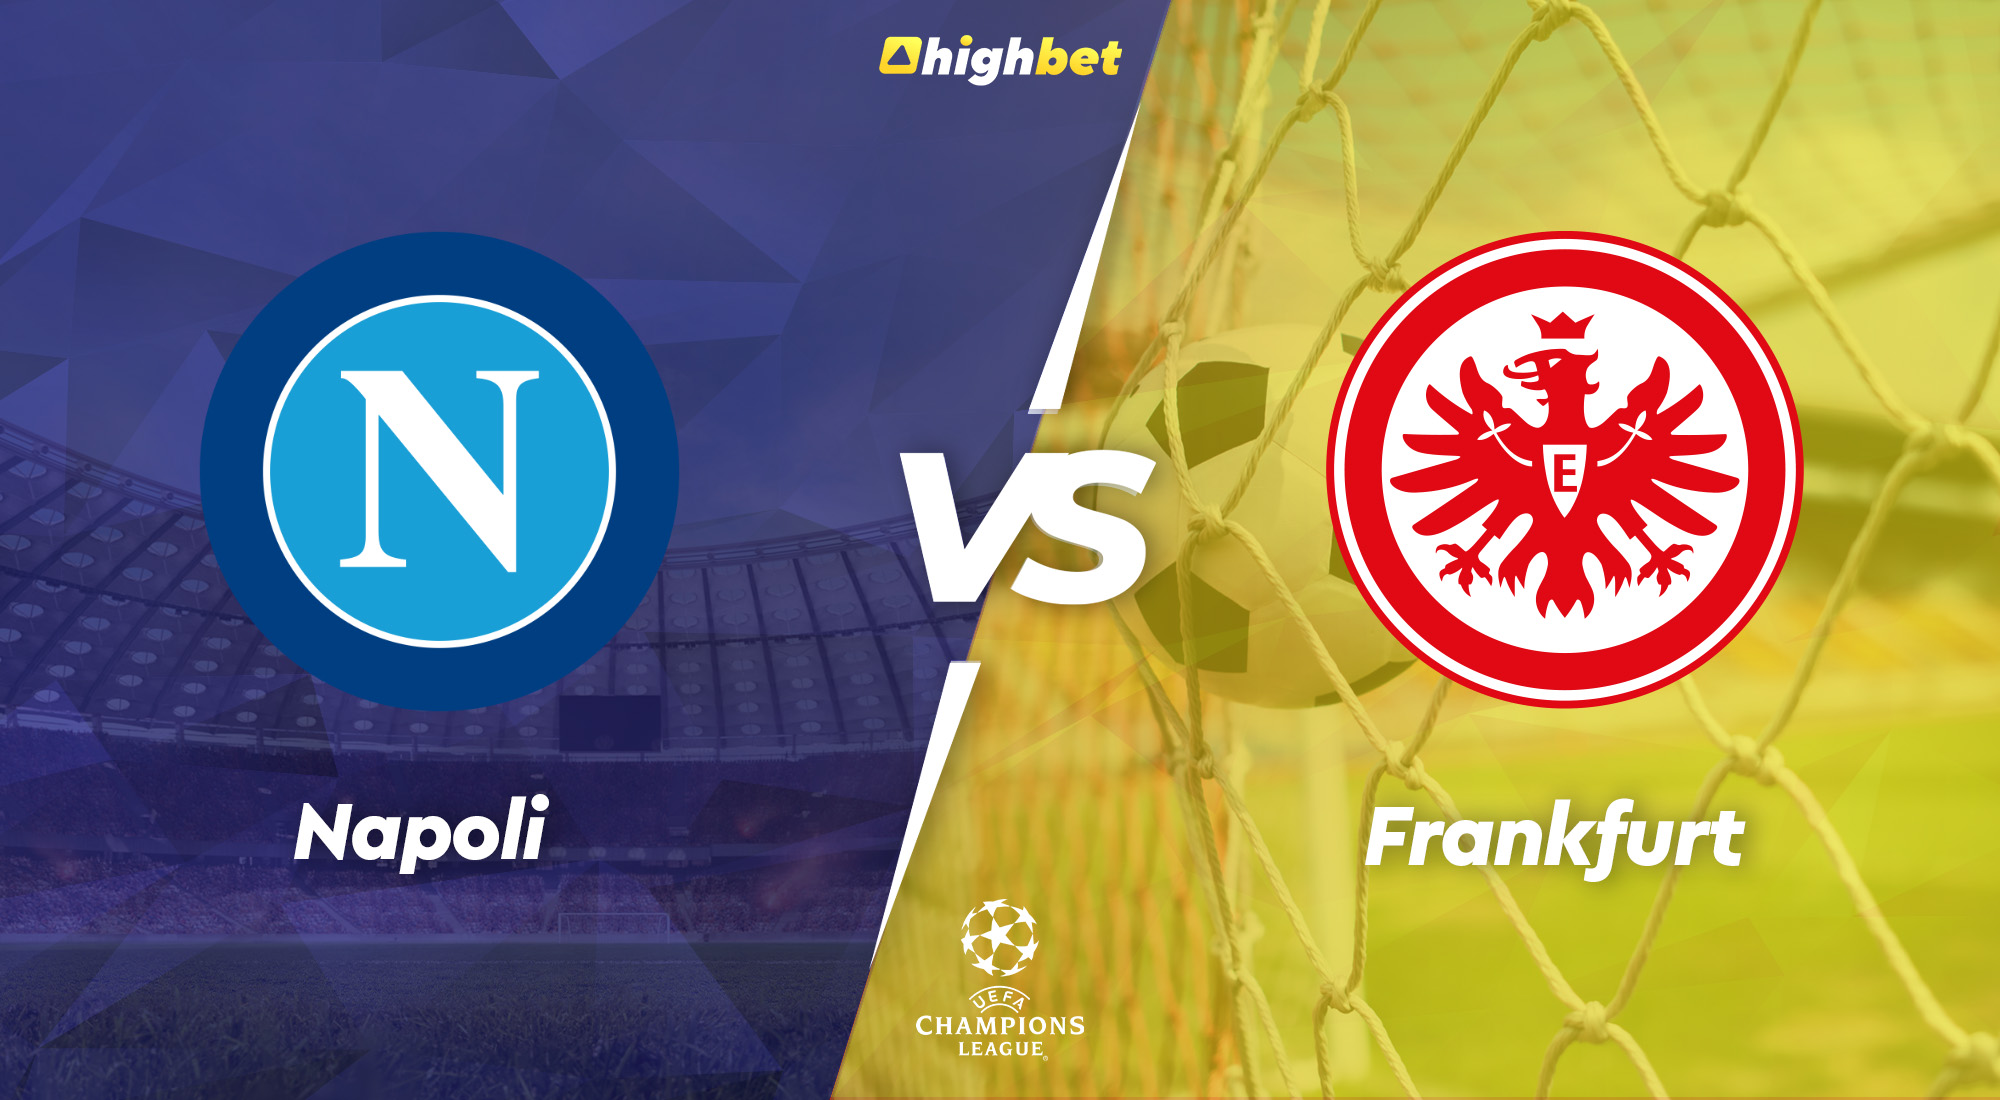 Napoli vs Frankfurt - highbet UEFA Champions League Pre-Match Analysis